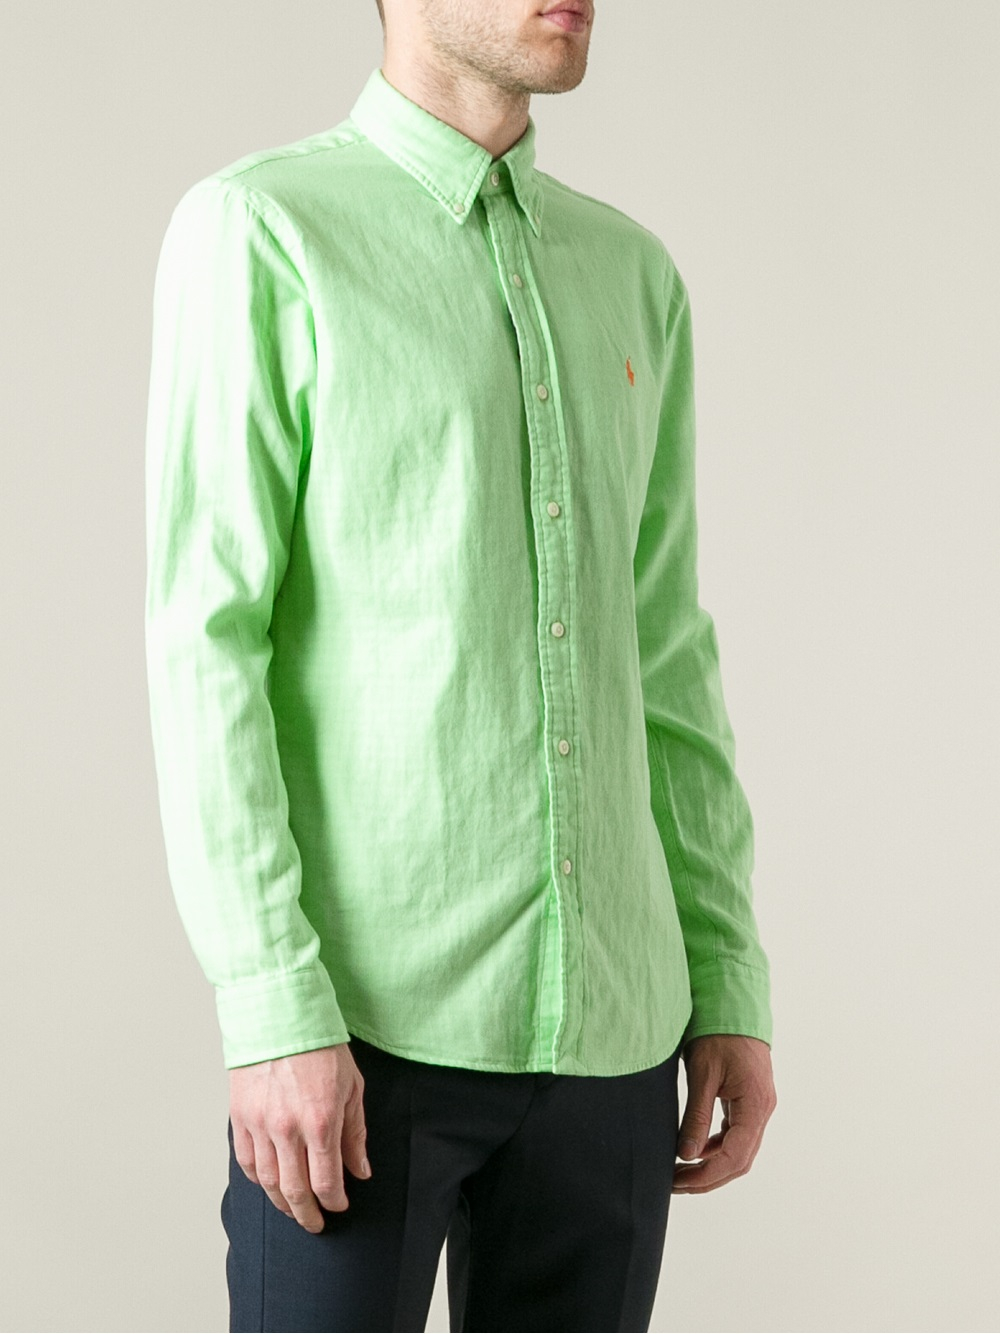 Polo Ralph Lauren Madras Button Down Shirt in Green for Men